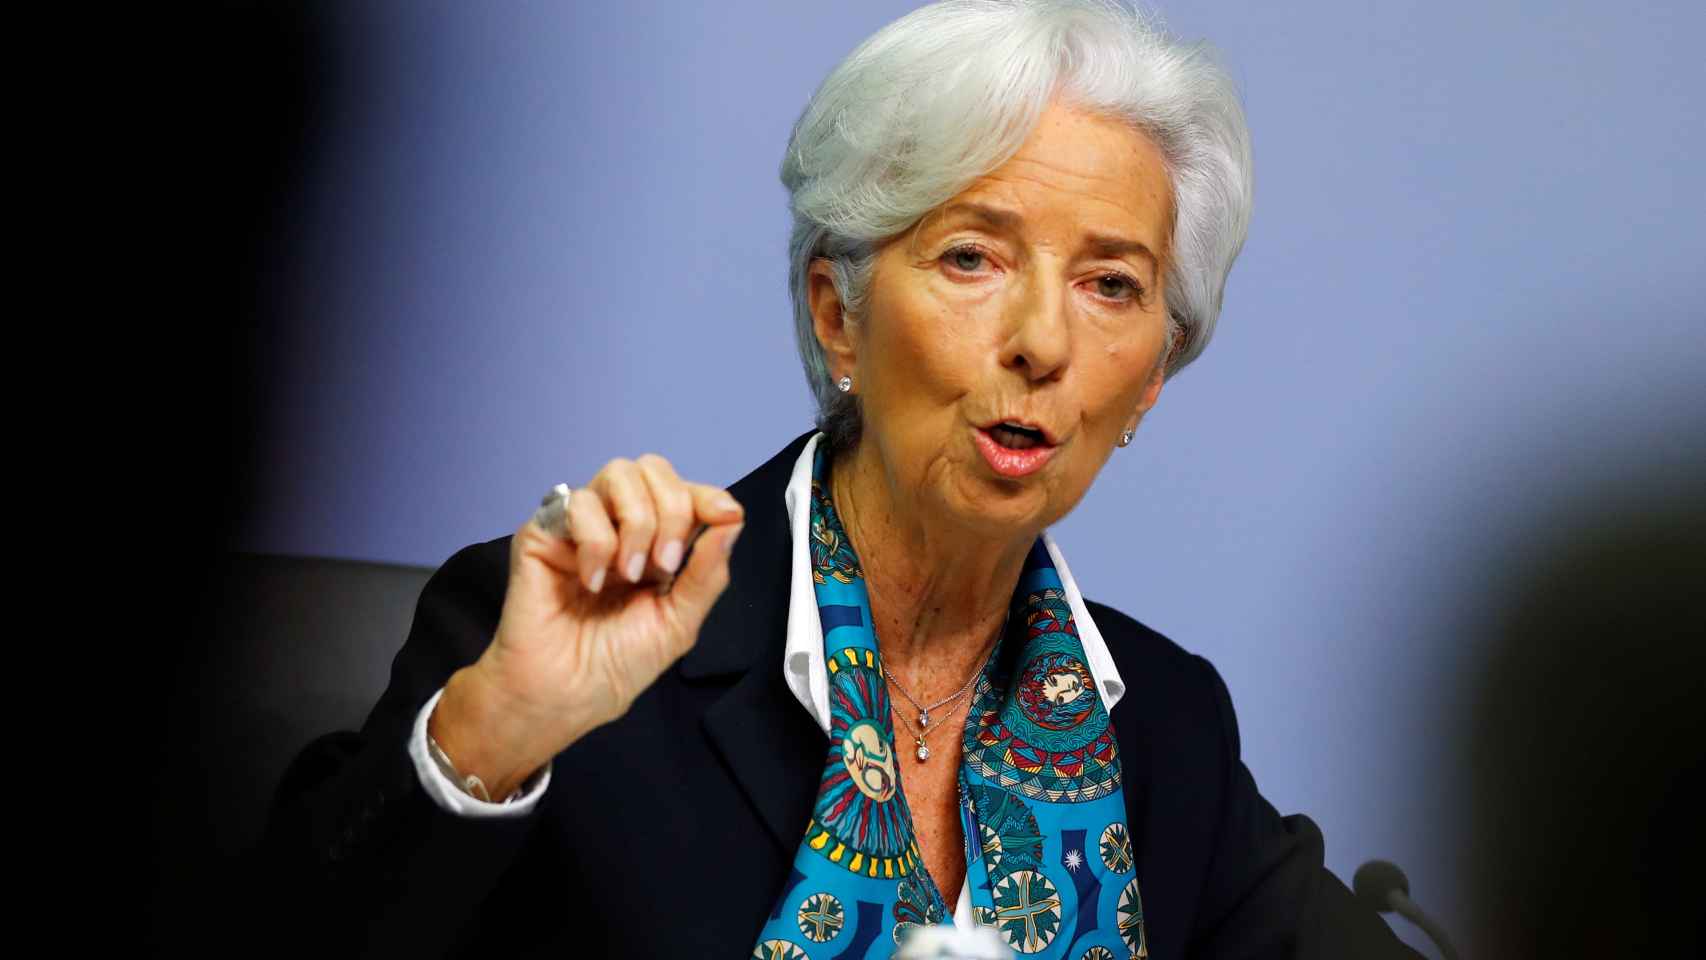 La presidenta del BCE, Christine Lagarde, sale al rescate de la eurozona